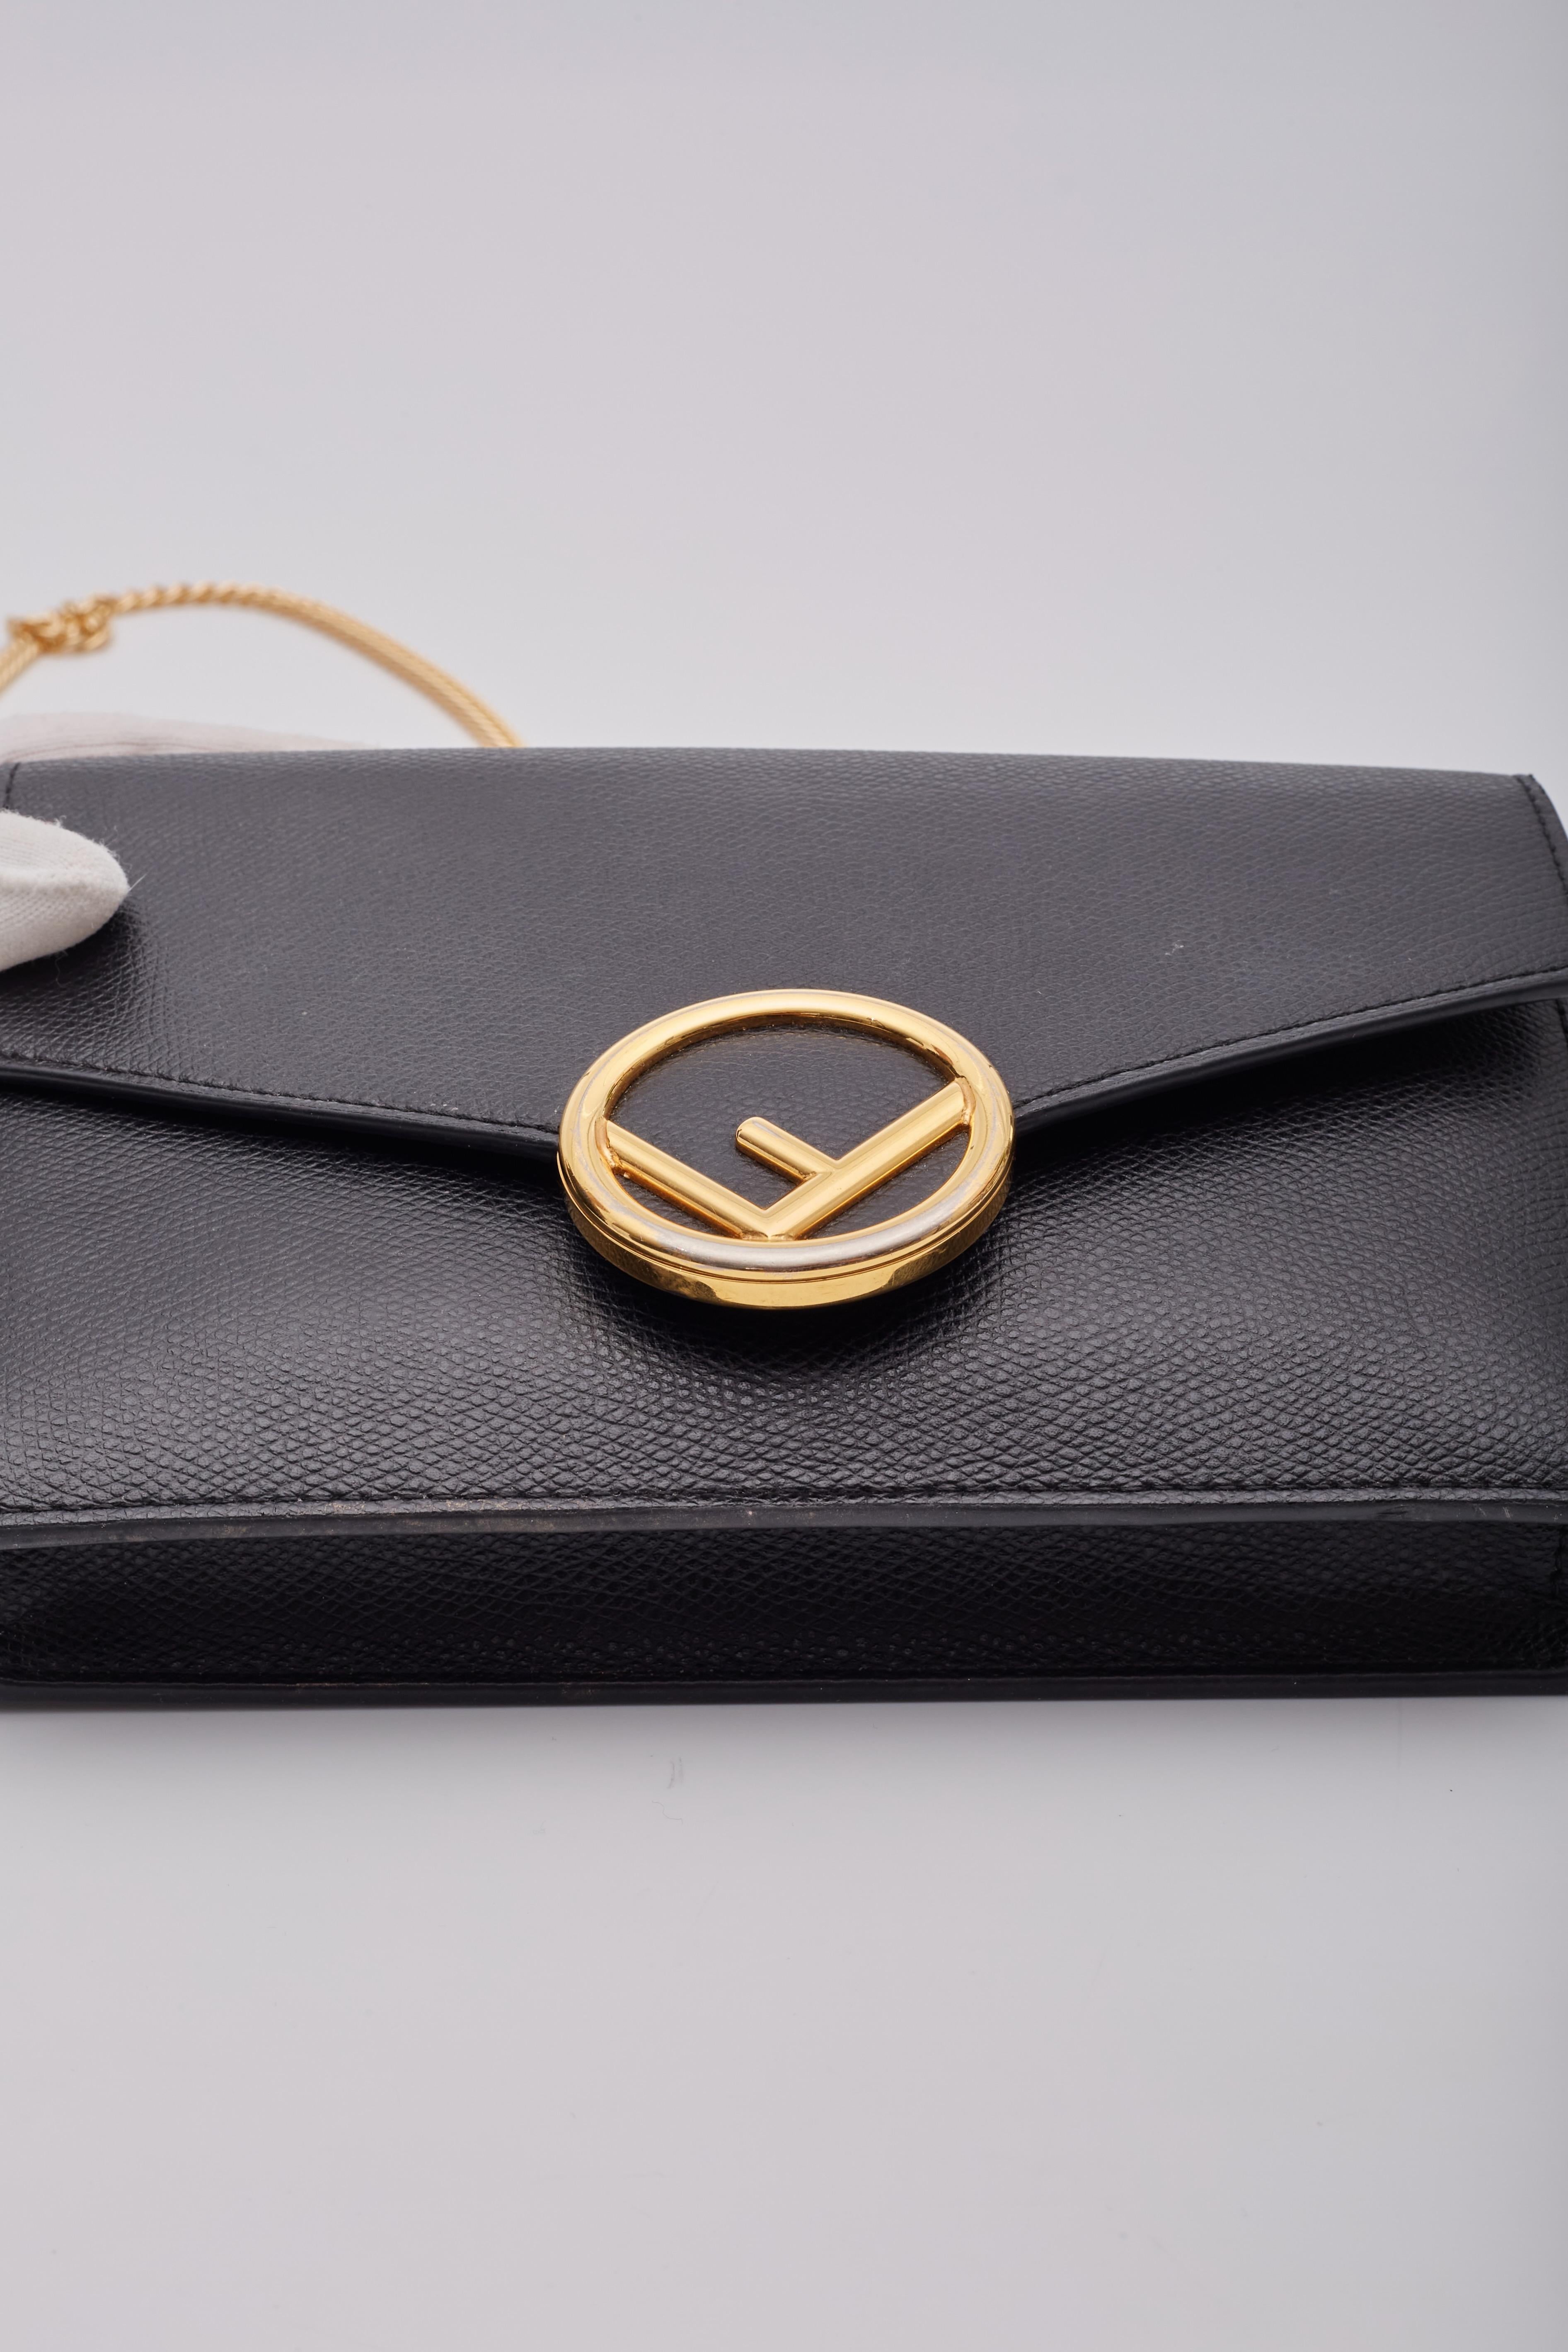 Fendi Black Leather F Logo Wallet On Chain Bag For Sale 2